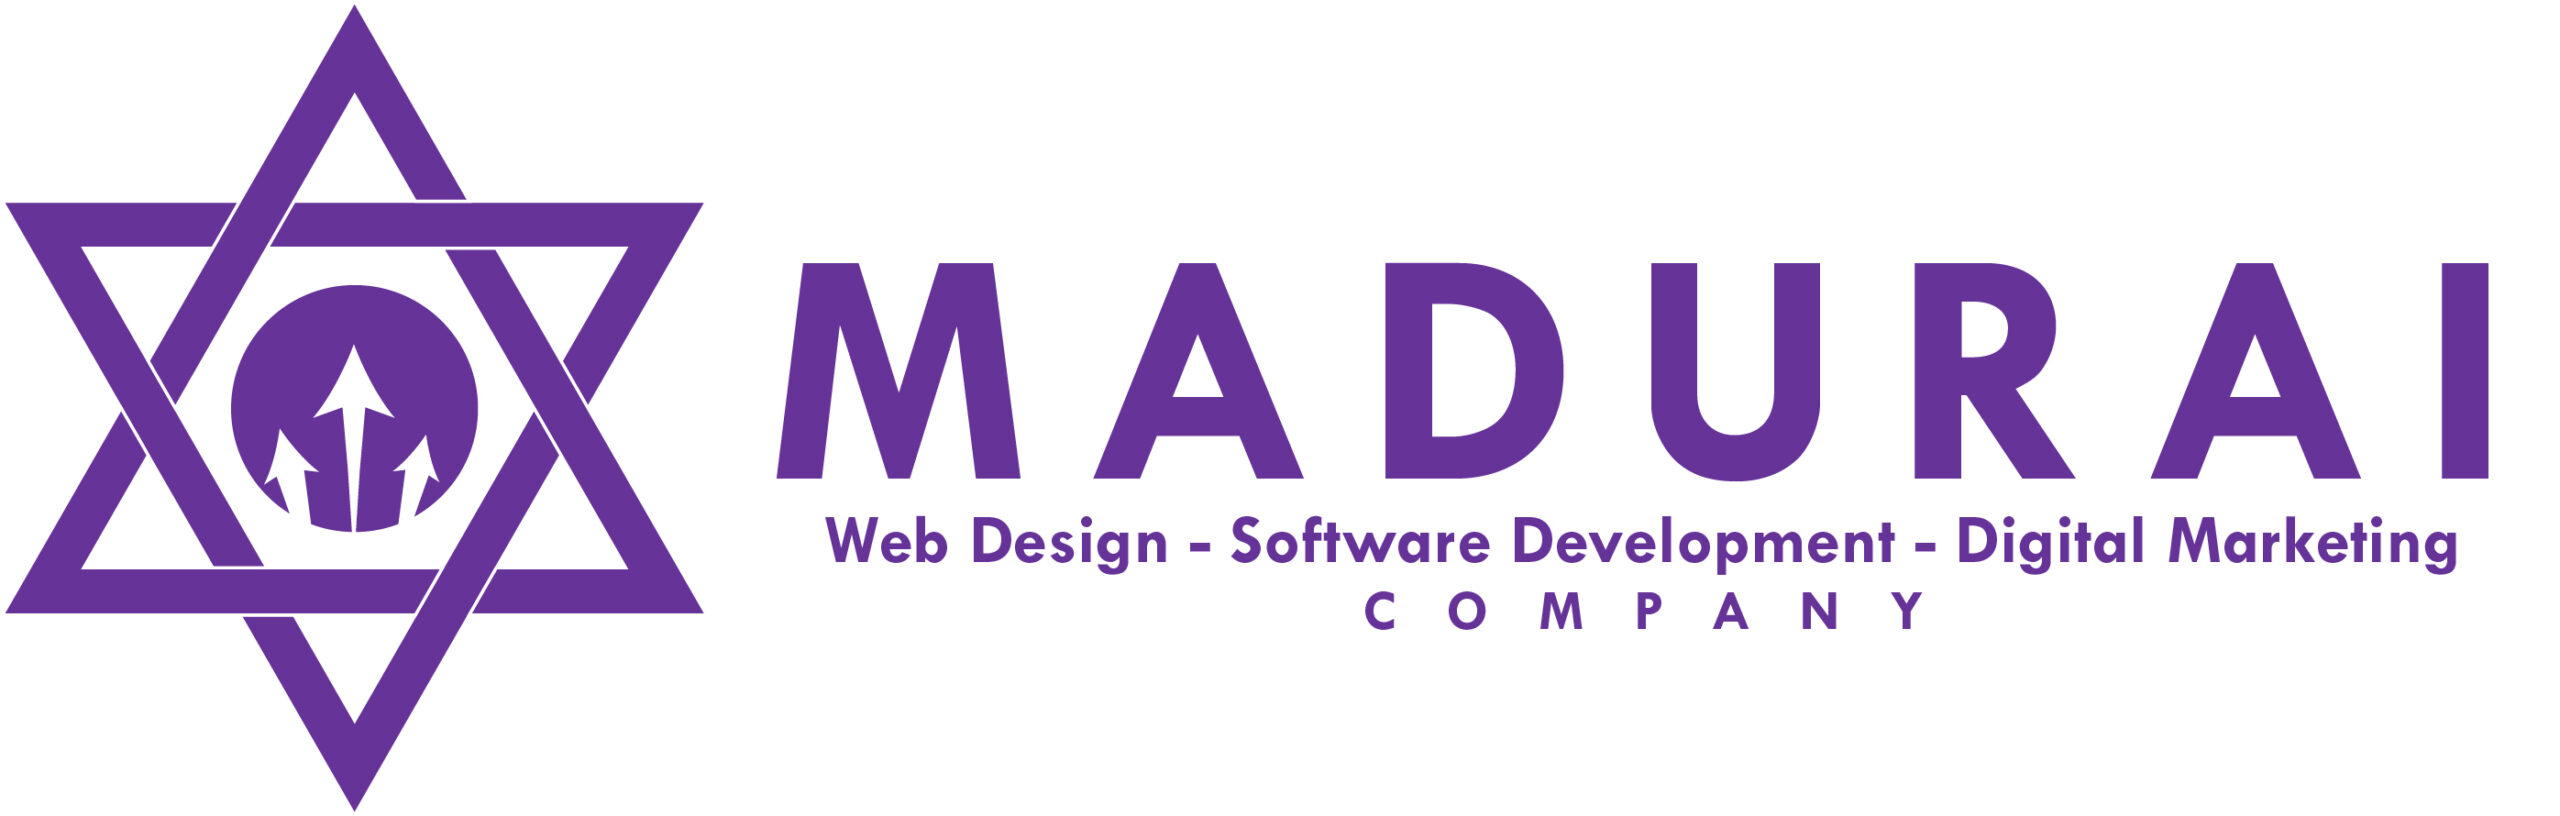 Best Web Designing Company in Madurai -Spiegel Technologies - IssueWire